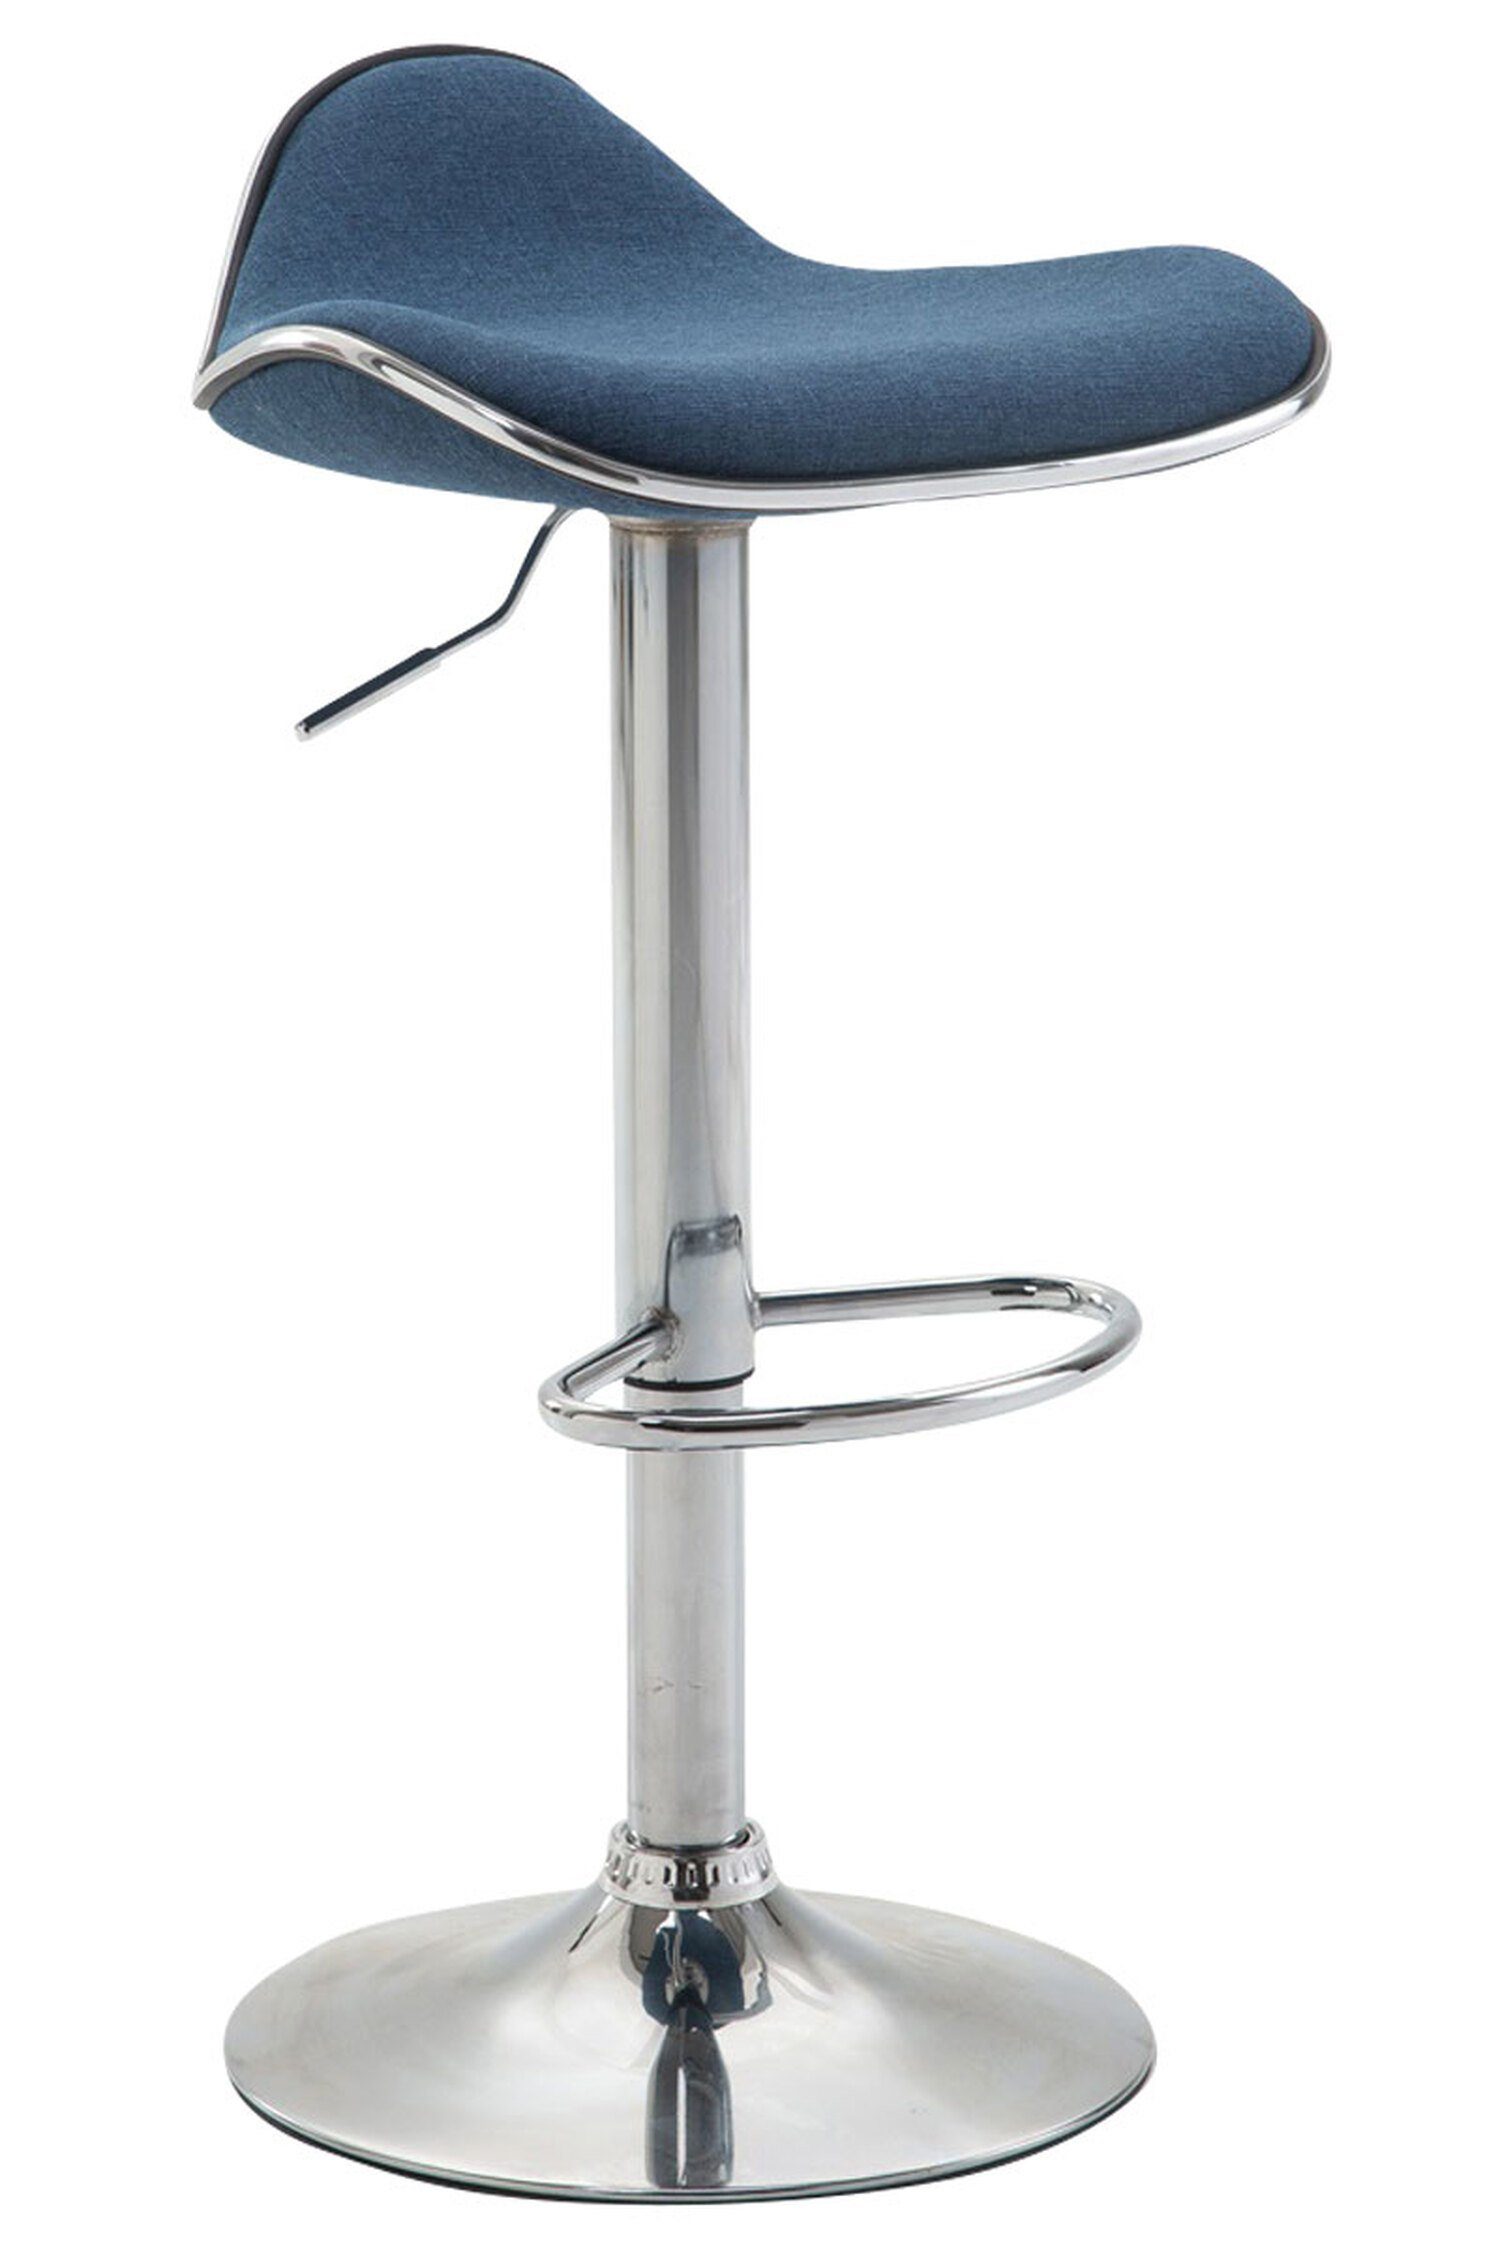 TPFLiving Barhocker Shangrila (Barstuhl höhenverstellbar - Hocker für Theke & Küche - Tresenhocker), 360° drehbar - chromfarbener Stahl - Sitzfläche: Stoff Blau